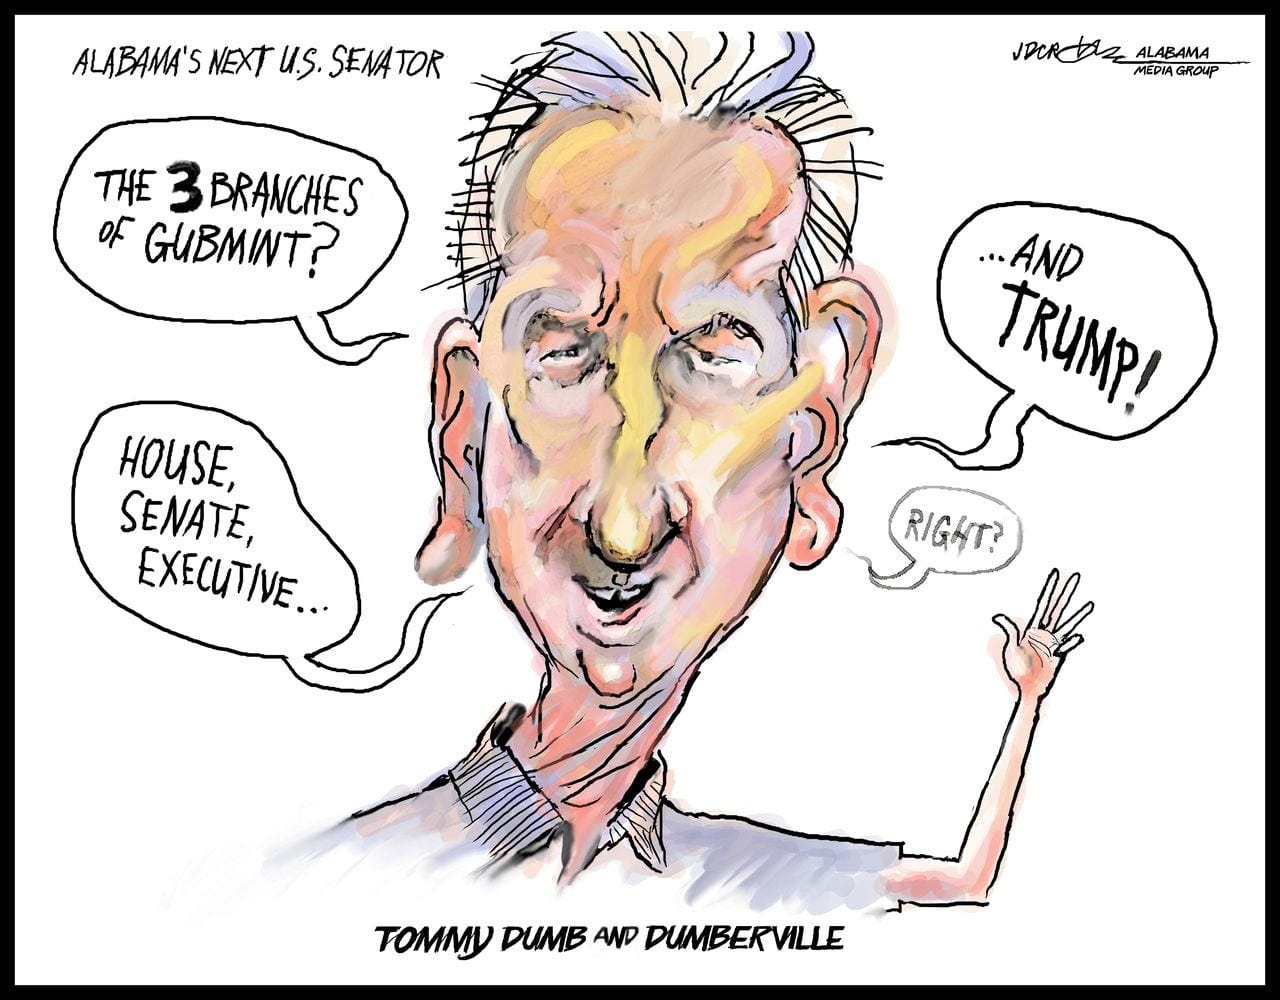 Senator-elect Tuberville? Our work here is dumb - al.com